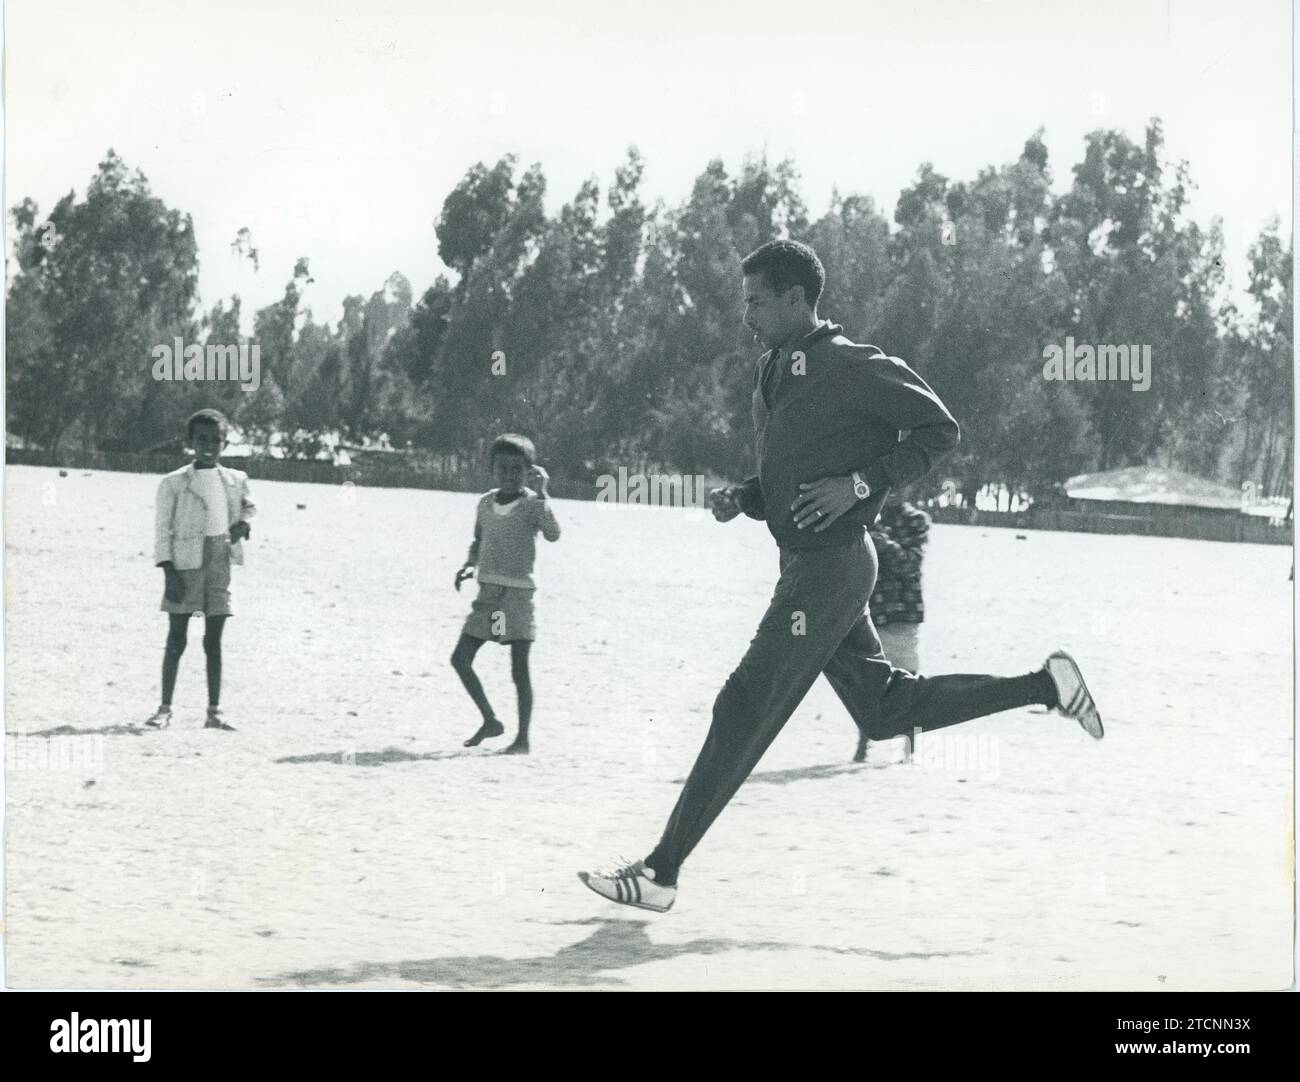 Ethiopia, February 1965. Abebe Bikila, marathon champion at the 1960 Rome Olympics, practicing sports. Credit: Album / Archivo ABC Stock Photo